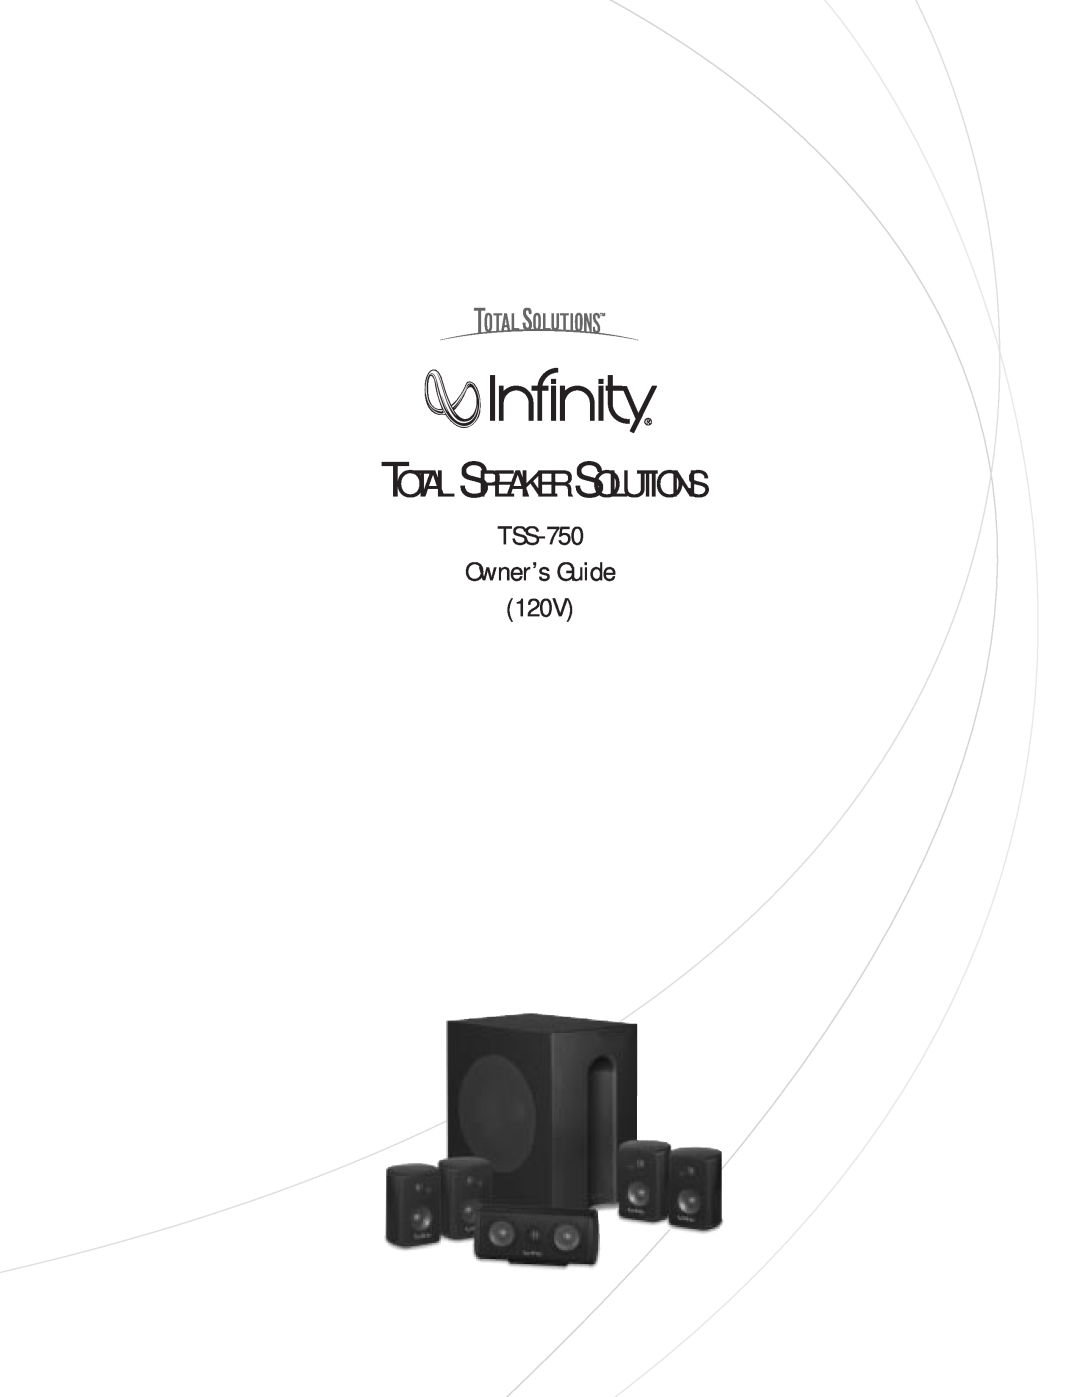 Infinity TOTAL SPEAKER SOLUTIONS manual Total Speaker Solutions, TSS-750 Owner’s Guide 